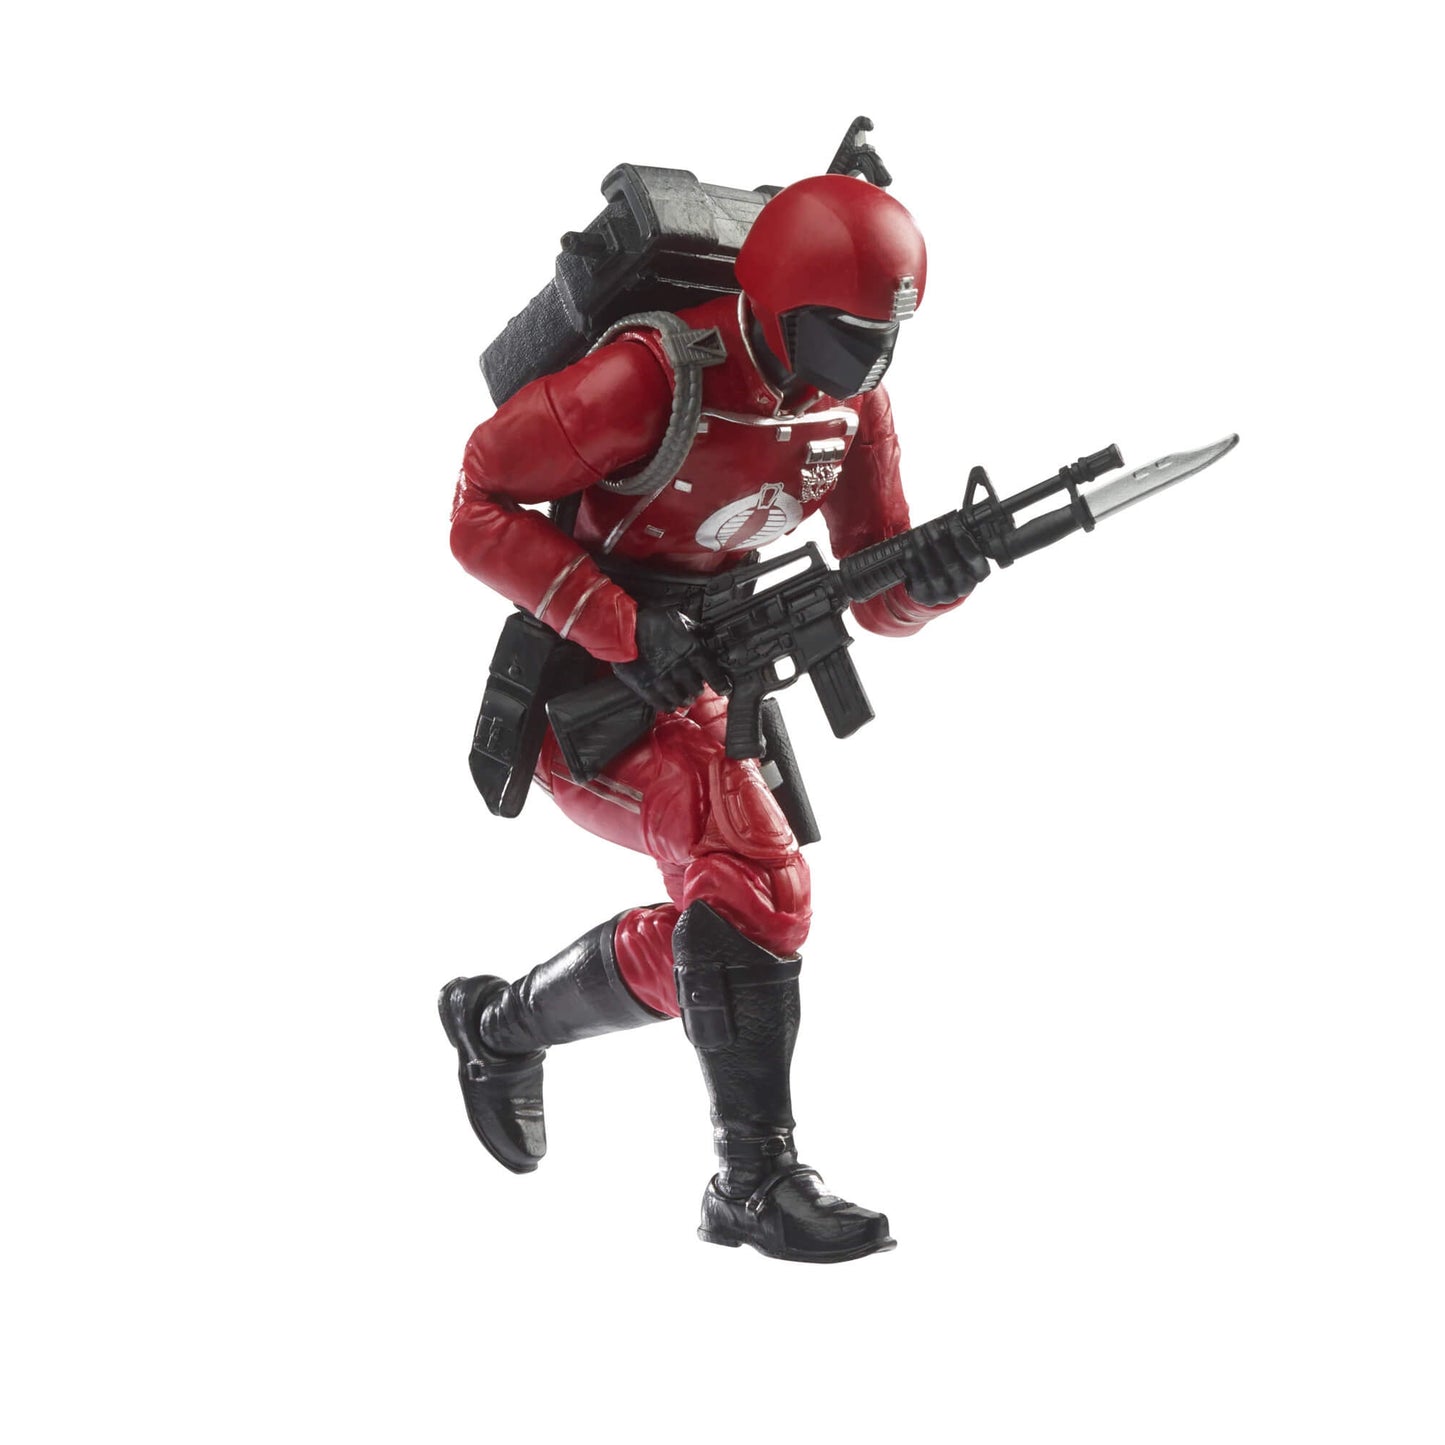 hasbro gi joe classified series cobra crimson guard action figure stalking pose with accessories